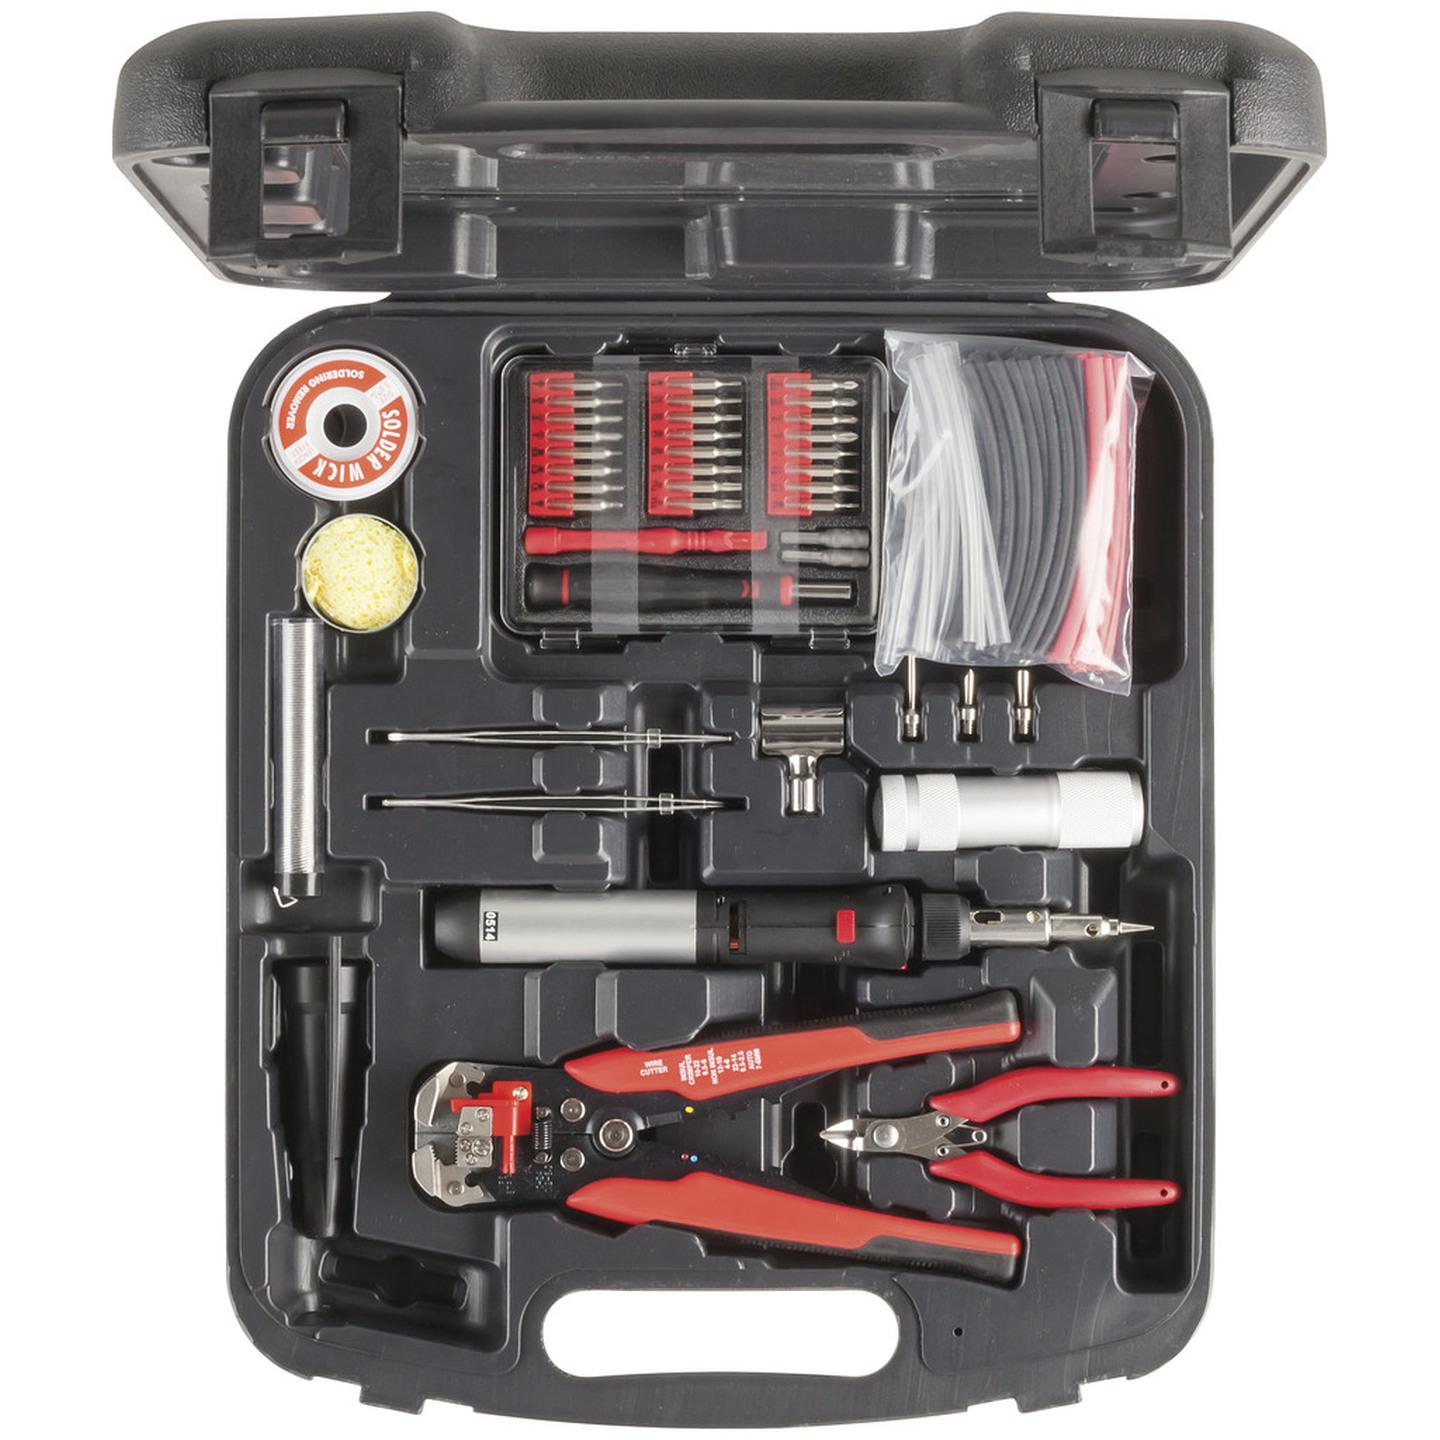 Pro Soldering Gas Kit with Screwdriver Set/Stripper/Heatshrink